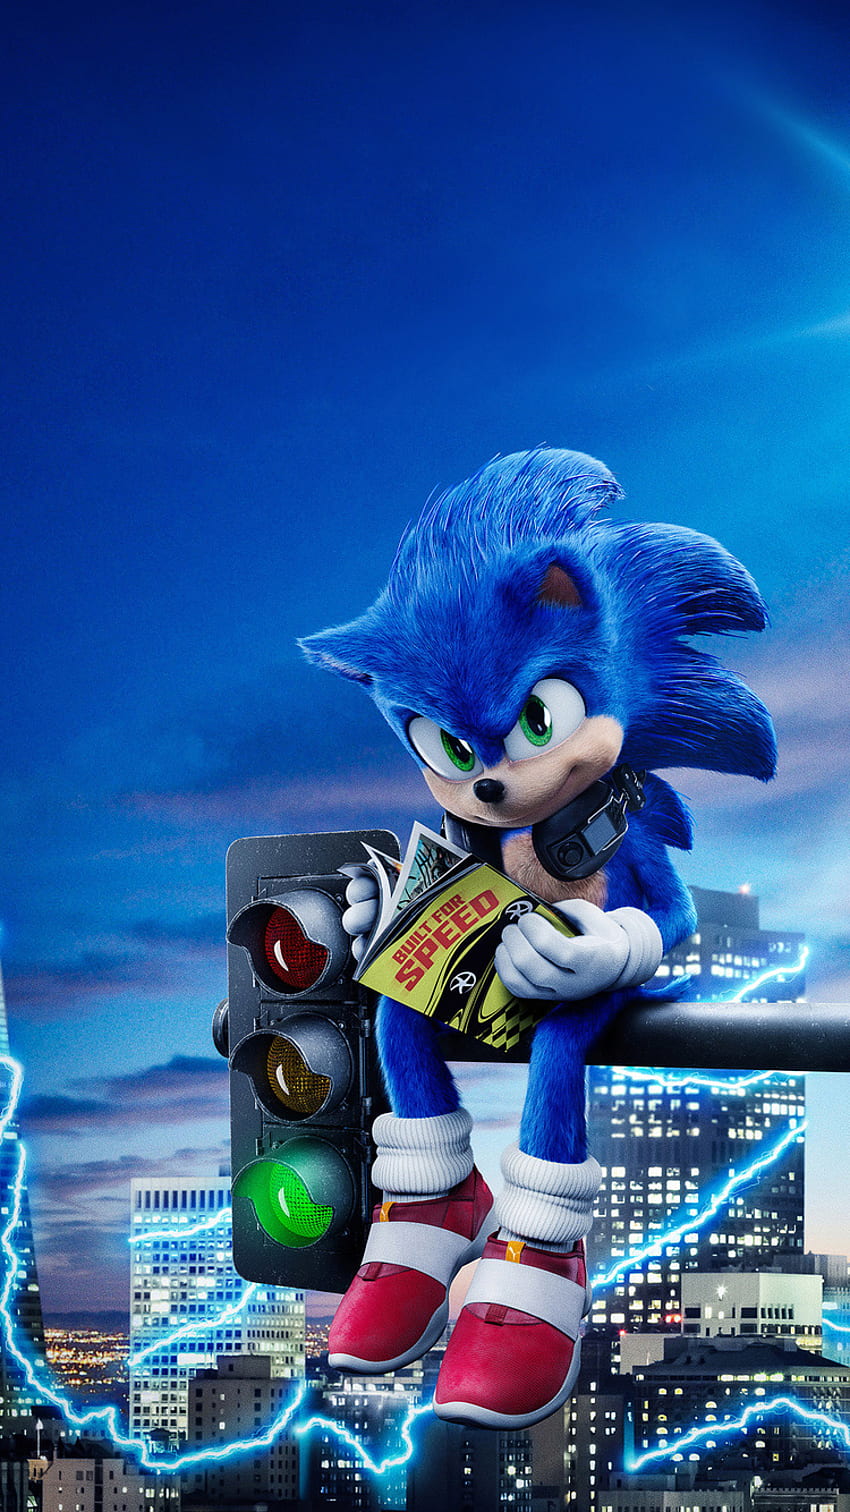 Download Sonic The Hedgehog in Joyful Acceleration Wallpaper  Wallpapers com